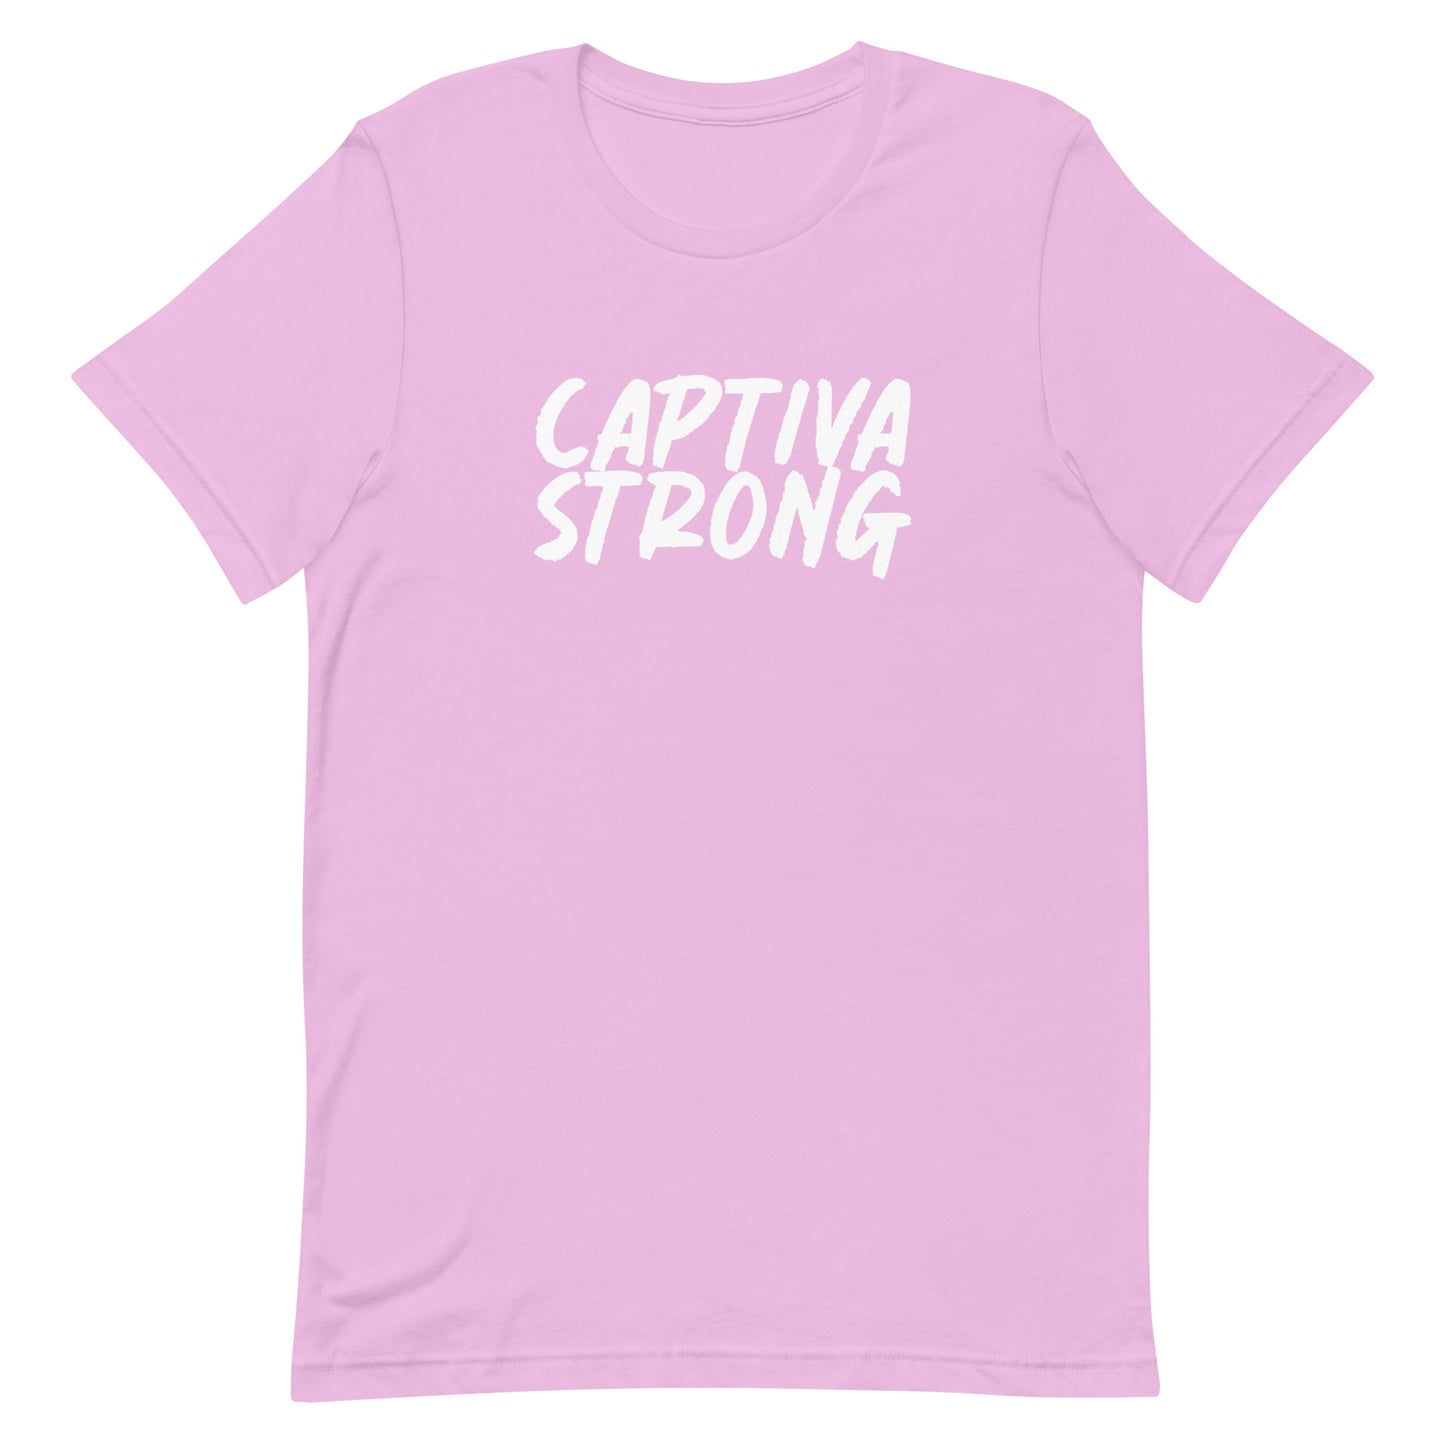 Captiva Strong Shirt